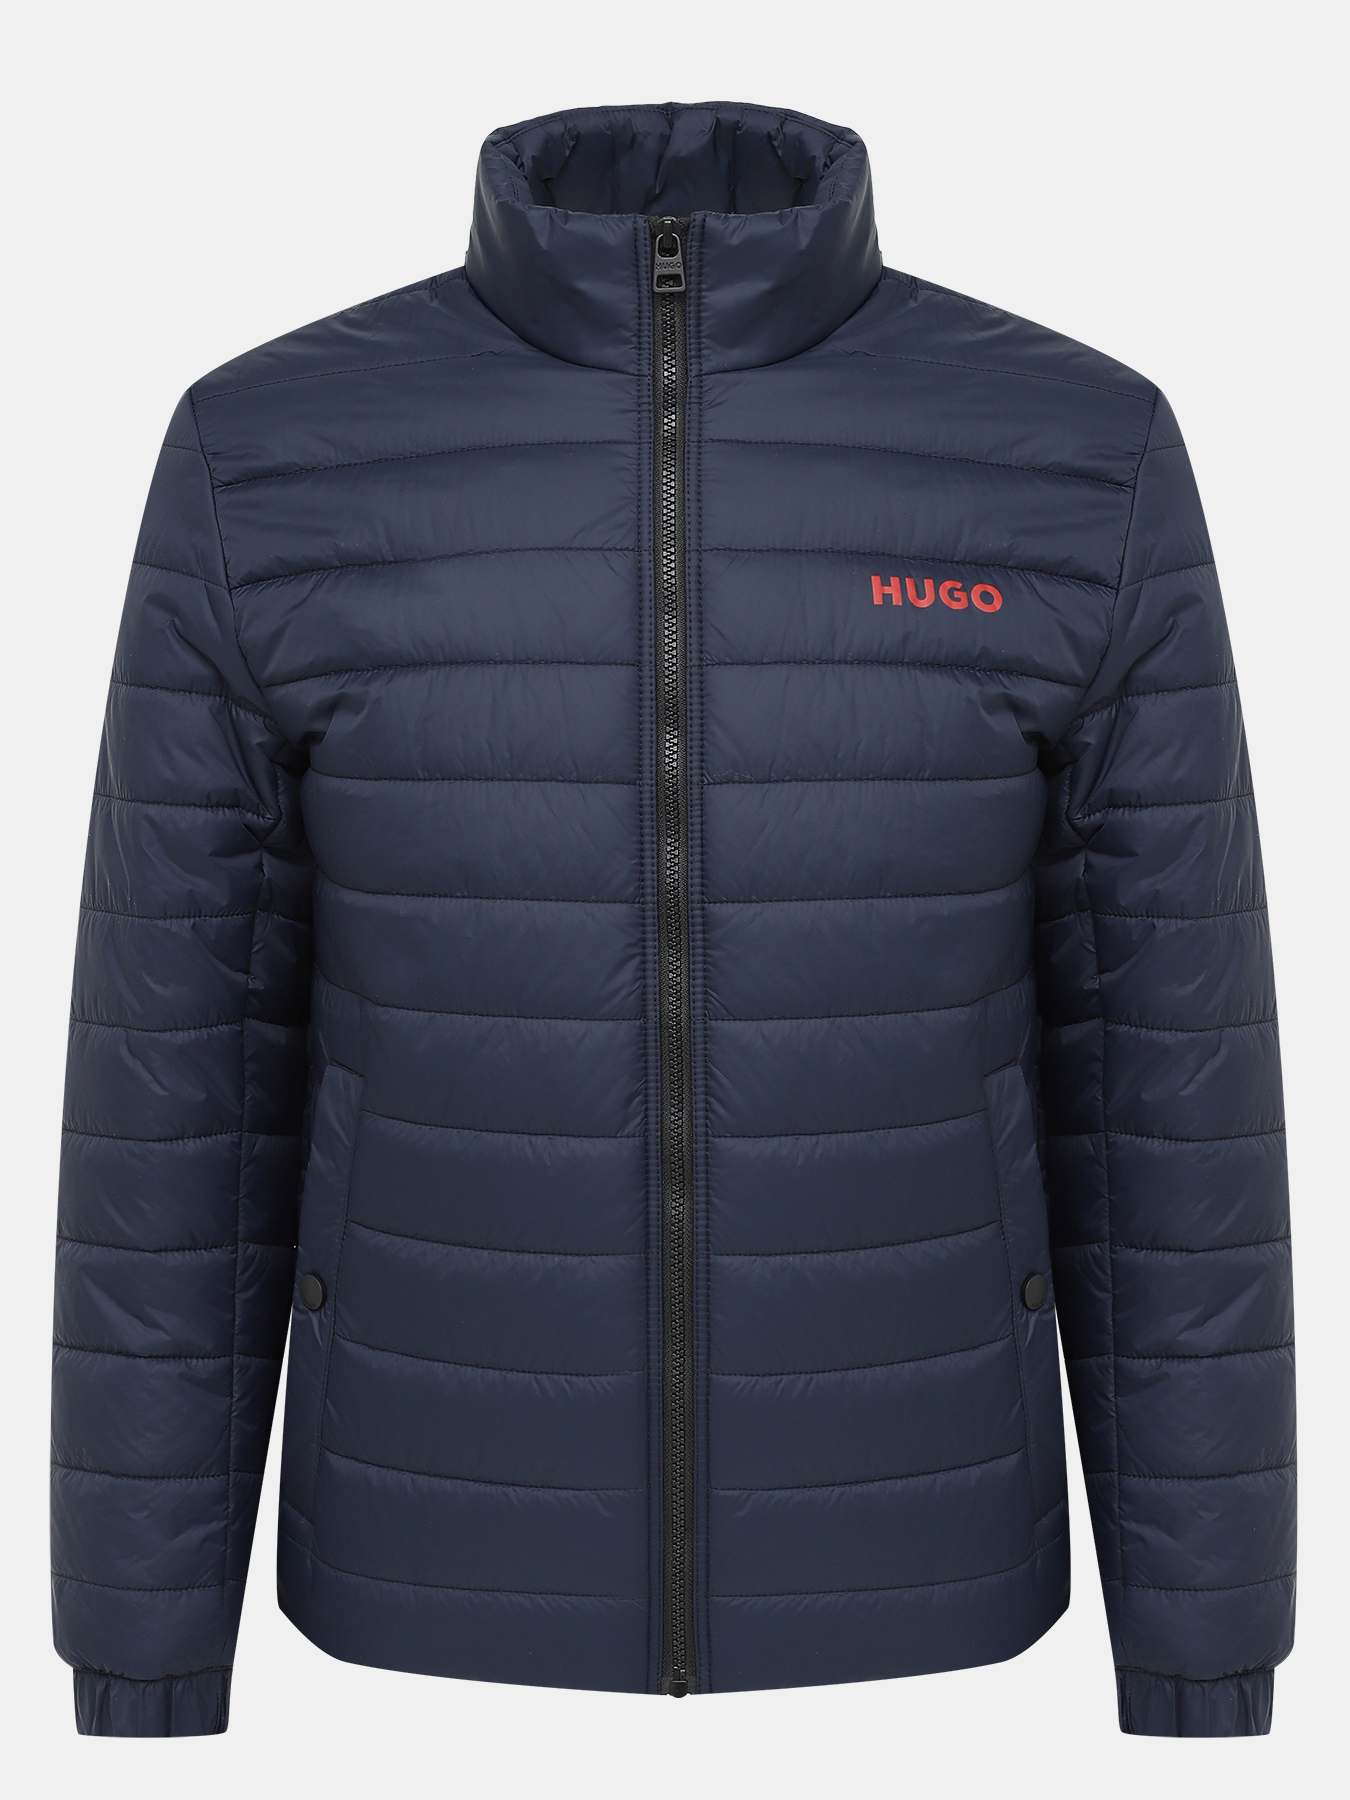 Куртка Benti HUGO 437018-046, цвет темно-синий, размер 54-56 - фото 1